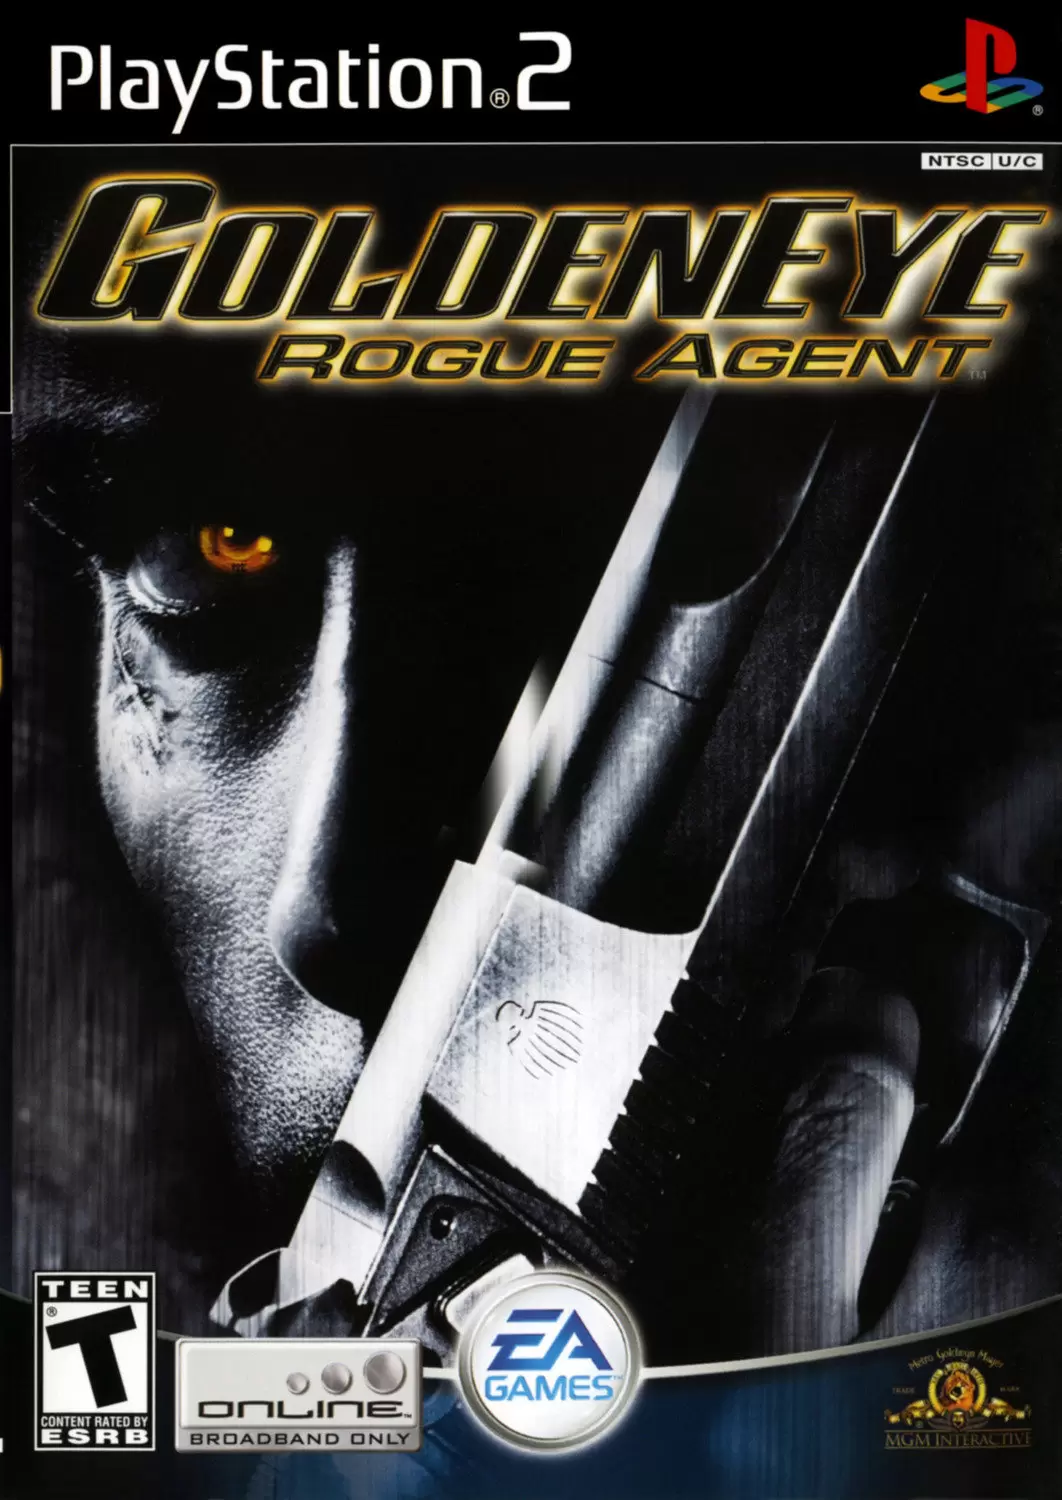 PS2 Games - GoldenEye: Rogue Agent